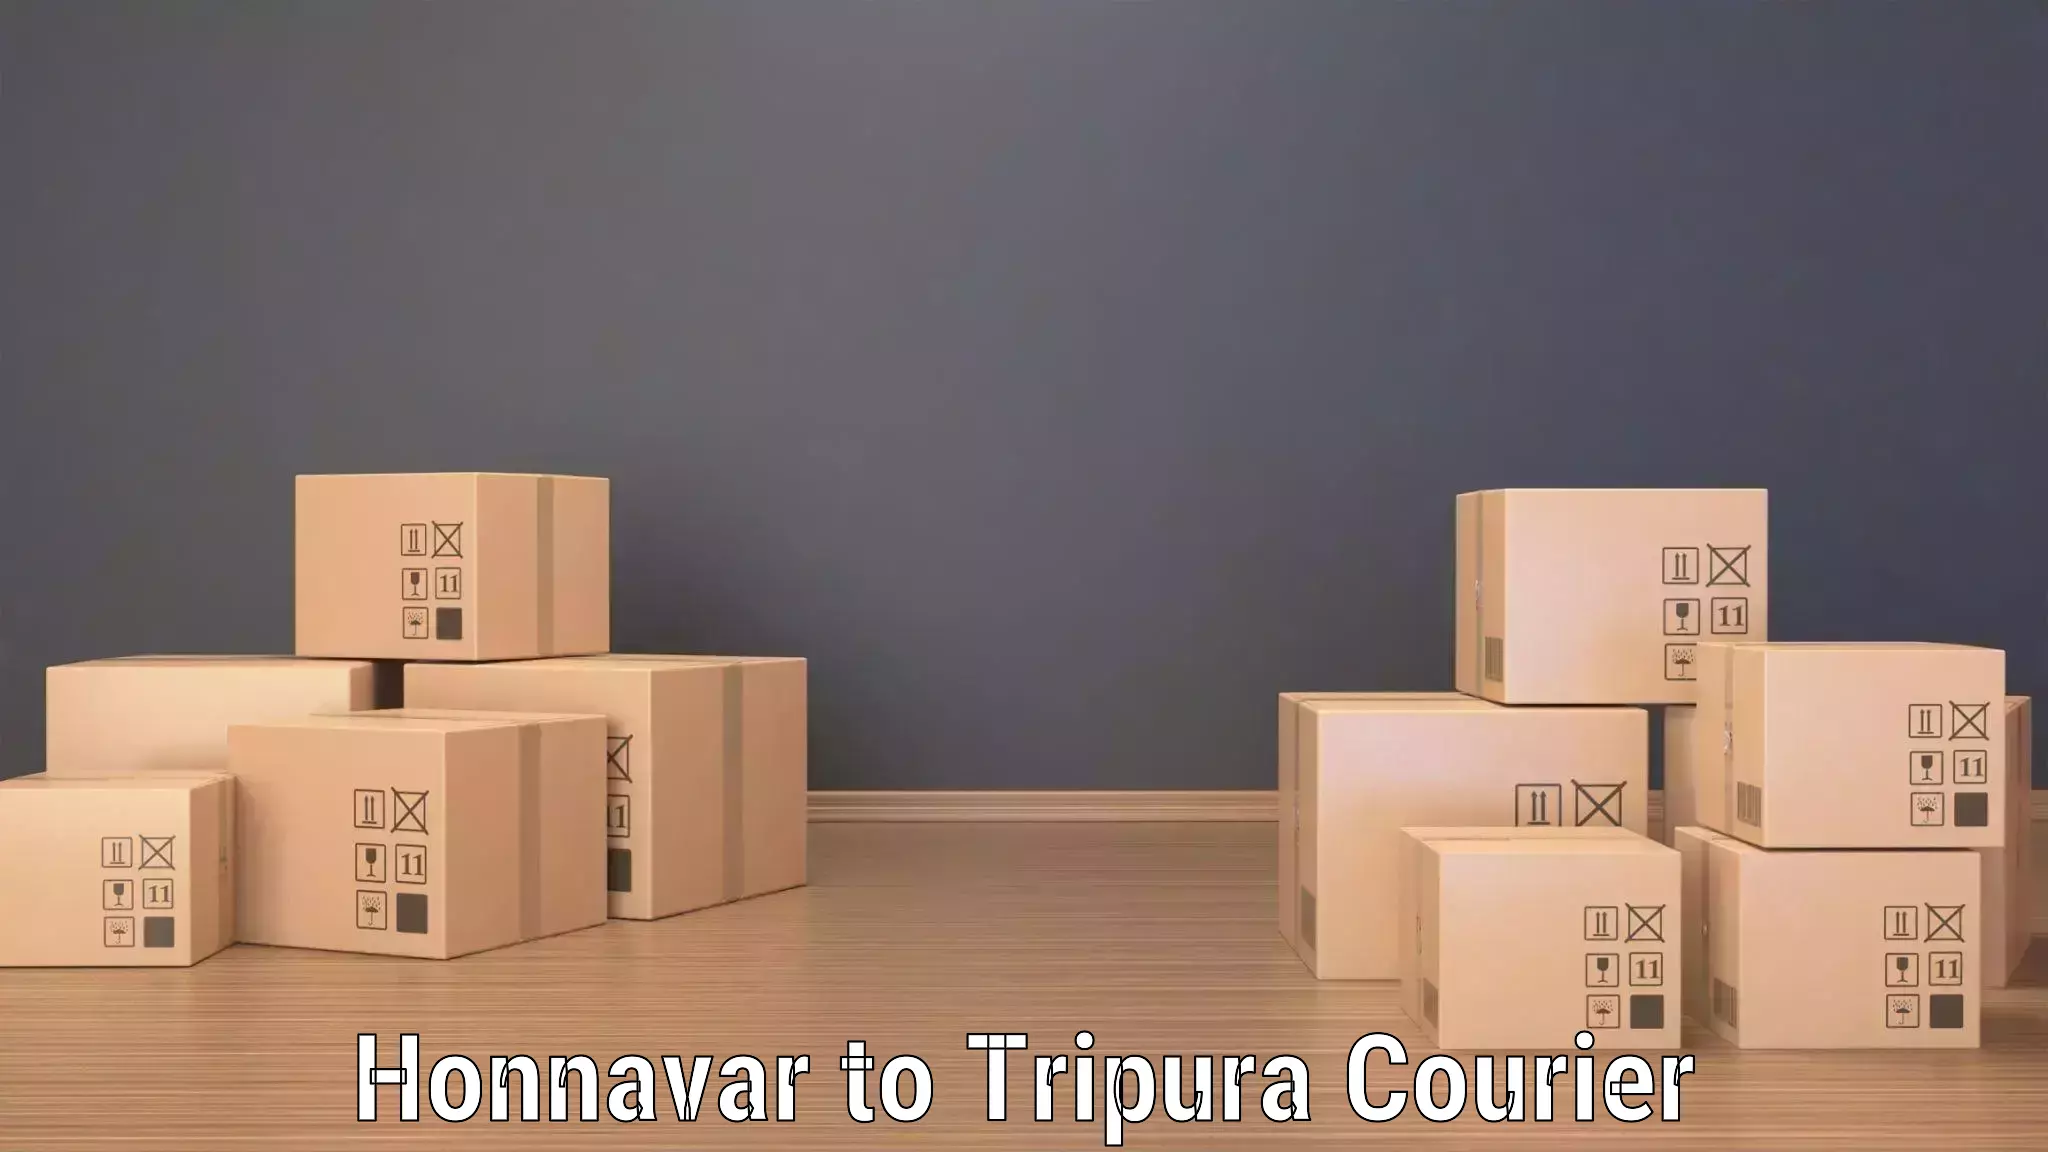 Same-day delivery options Honnavar to Udaipur Tripura